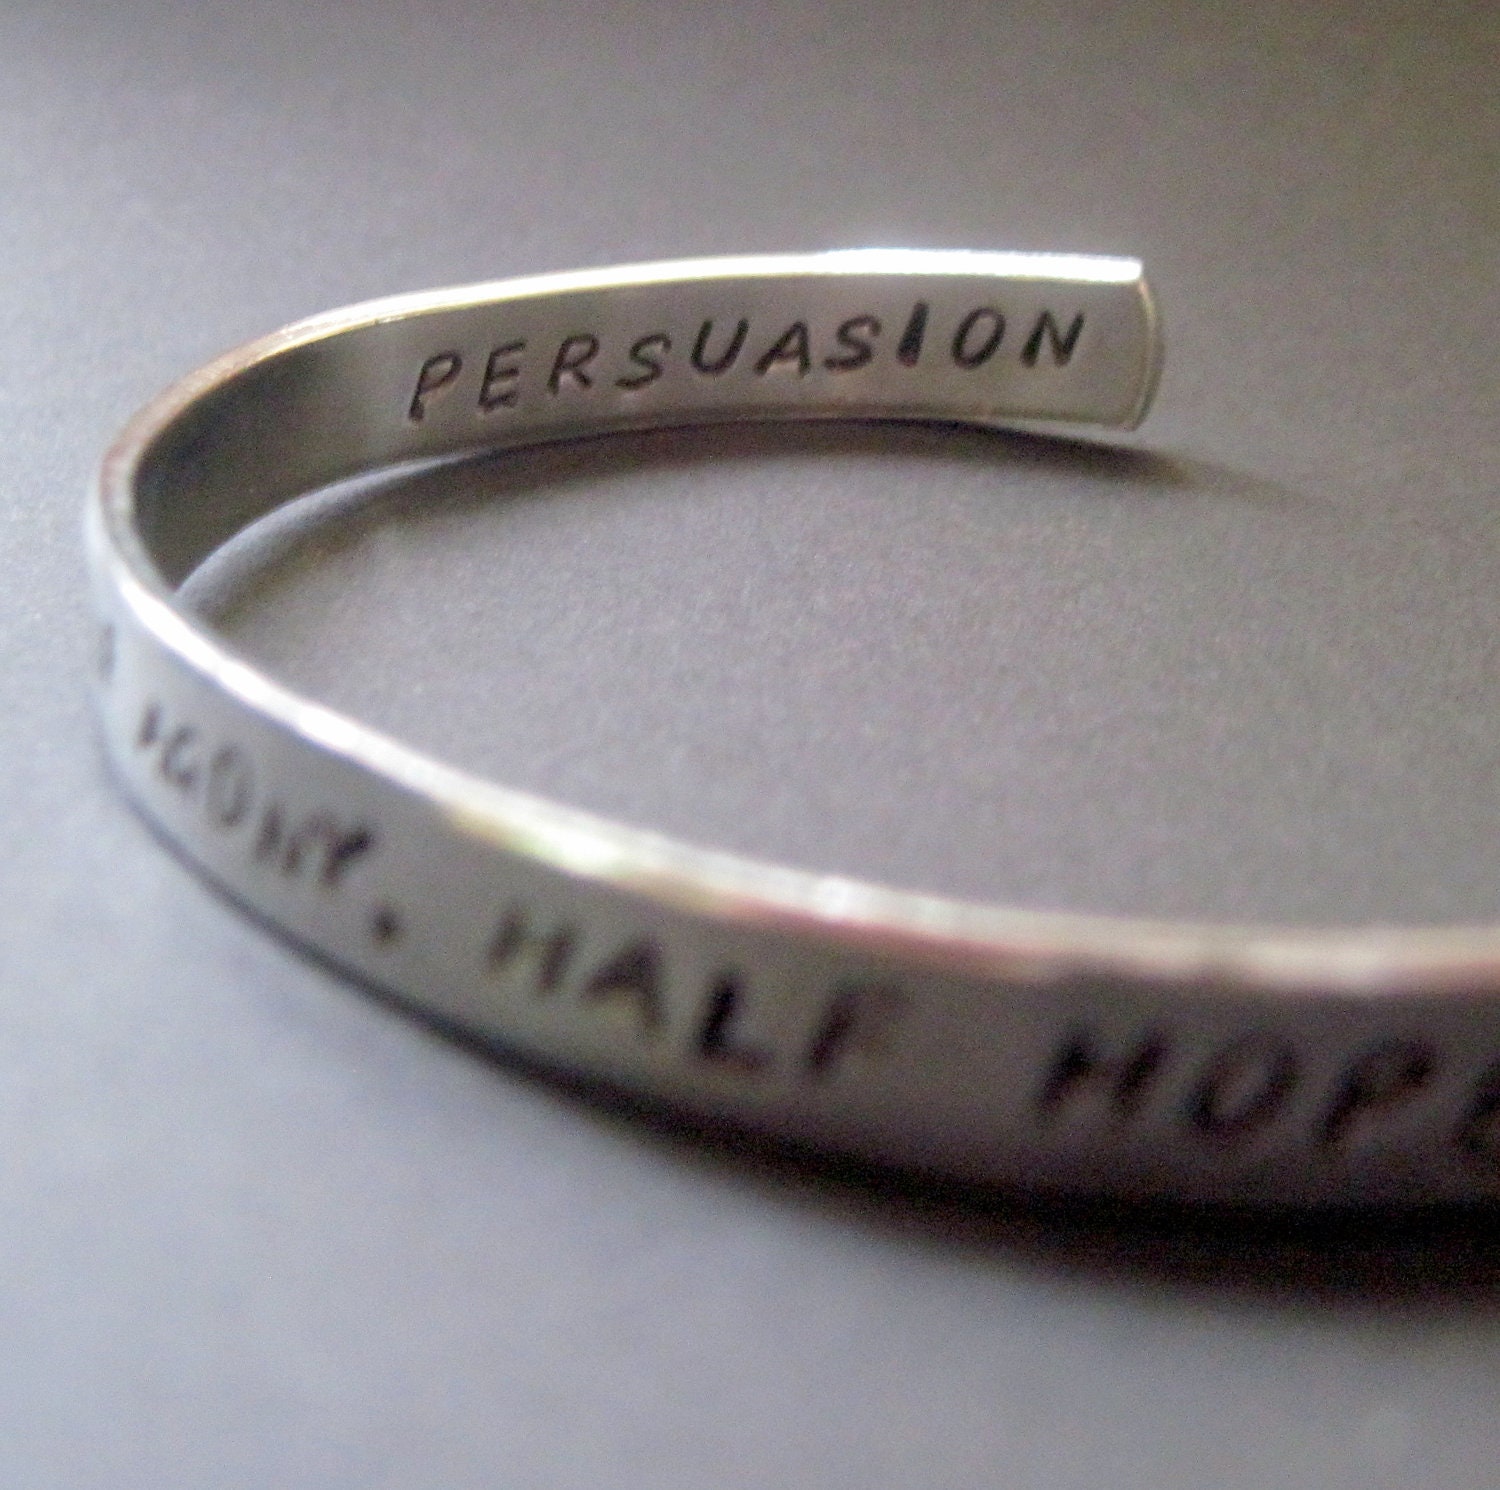 Jane Austen Bracelet - I Am Half Agony, Half Hope - 2-Sided Hand Stamped Aluminum Cuff - customizable - emerydrive